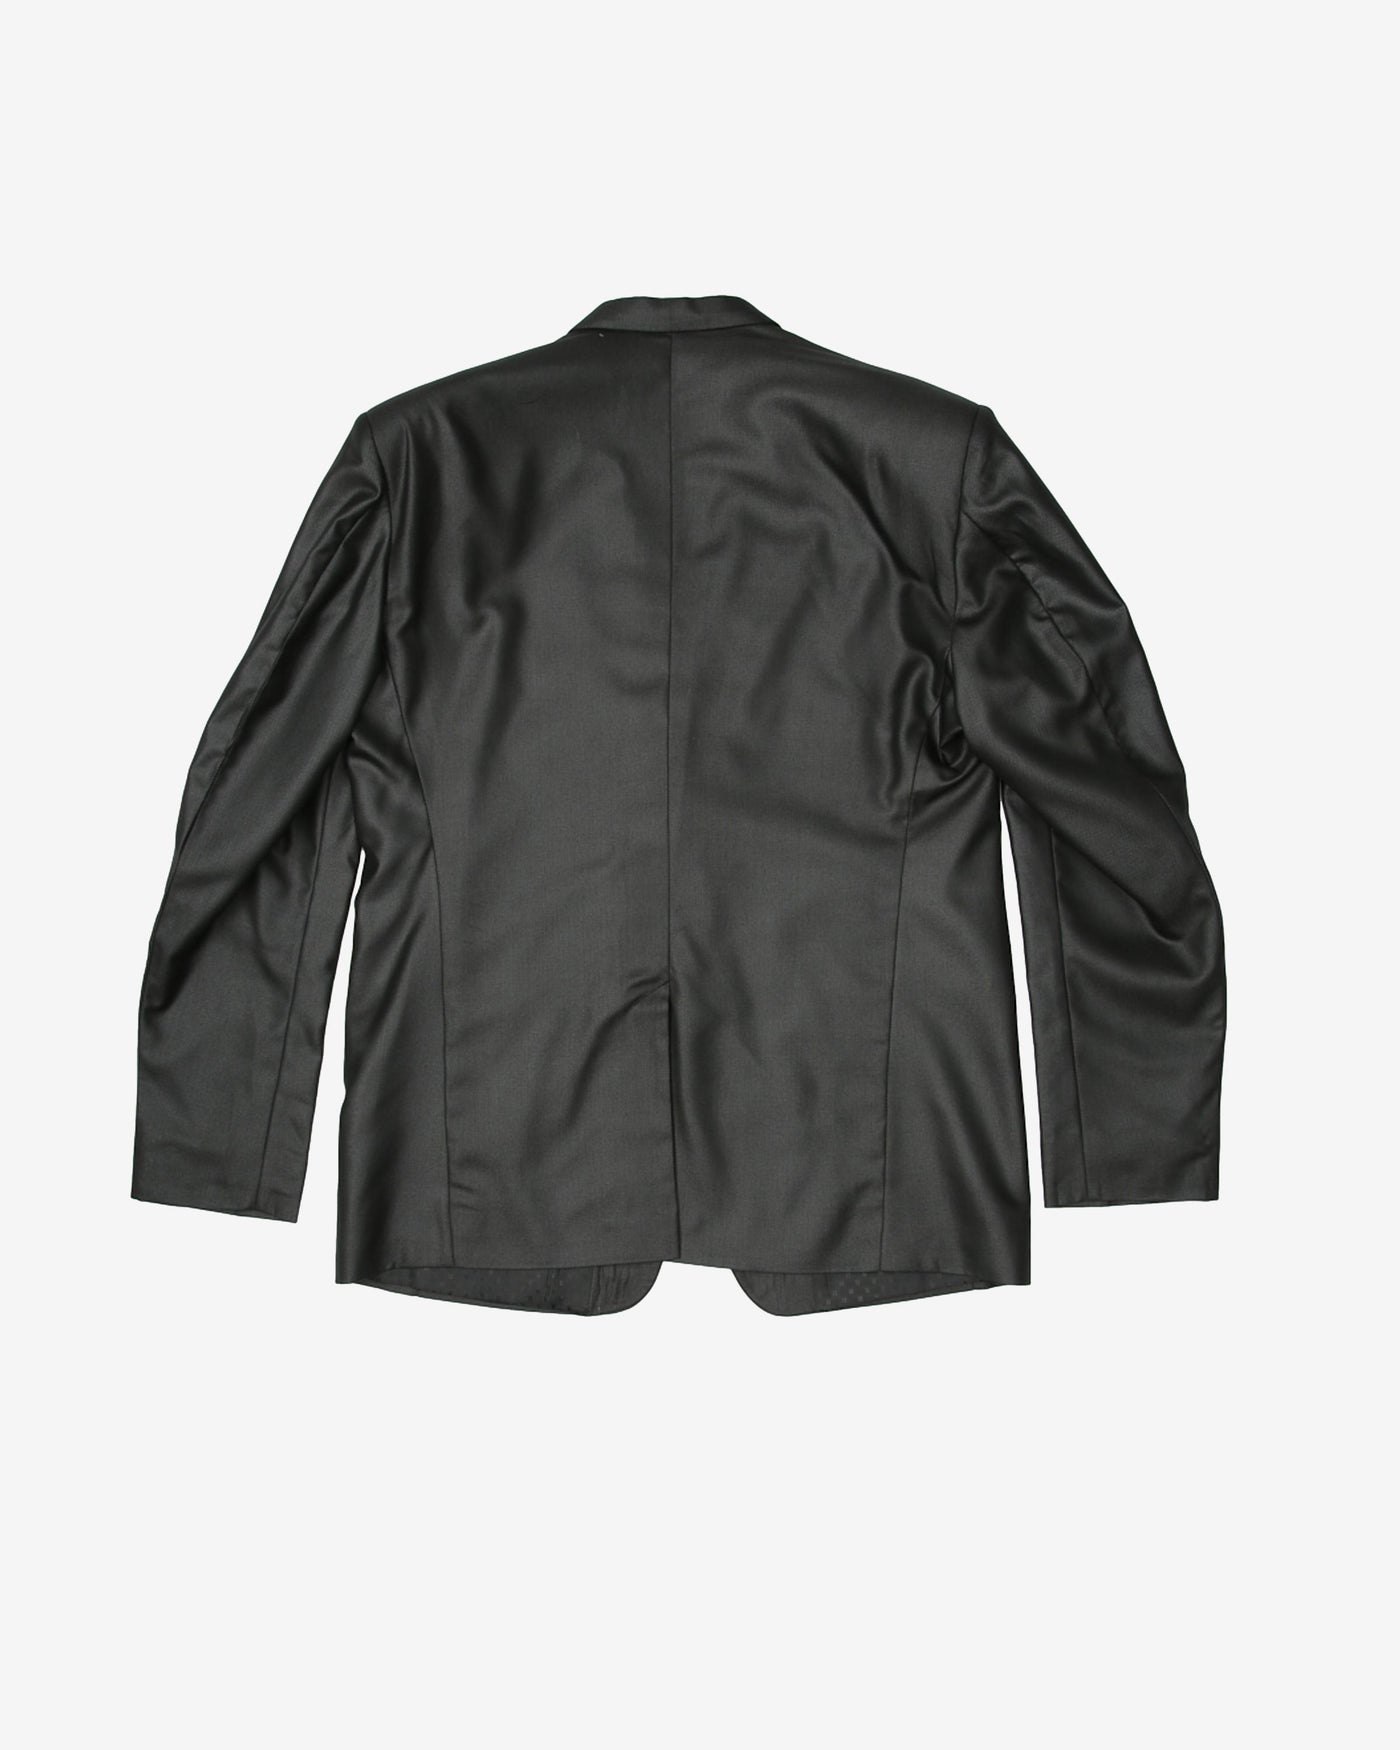 Vintage 90s Black / Dark Grey Two-Piece Suit - L / XL